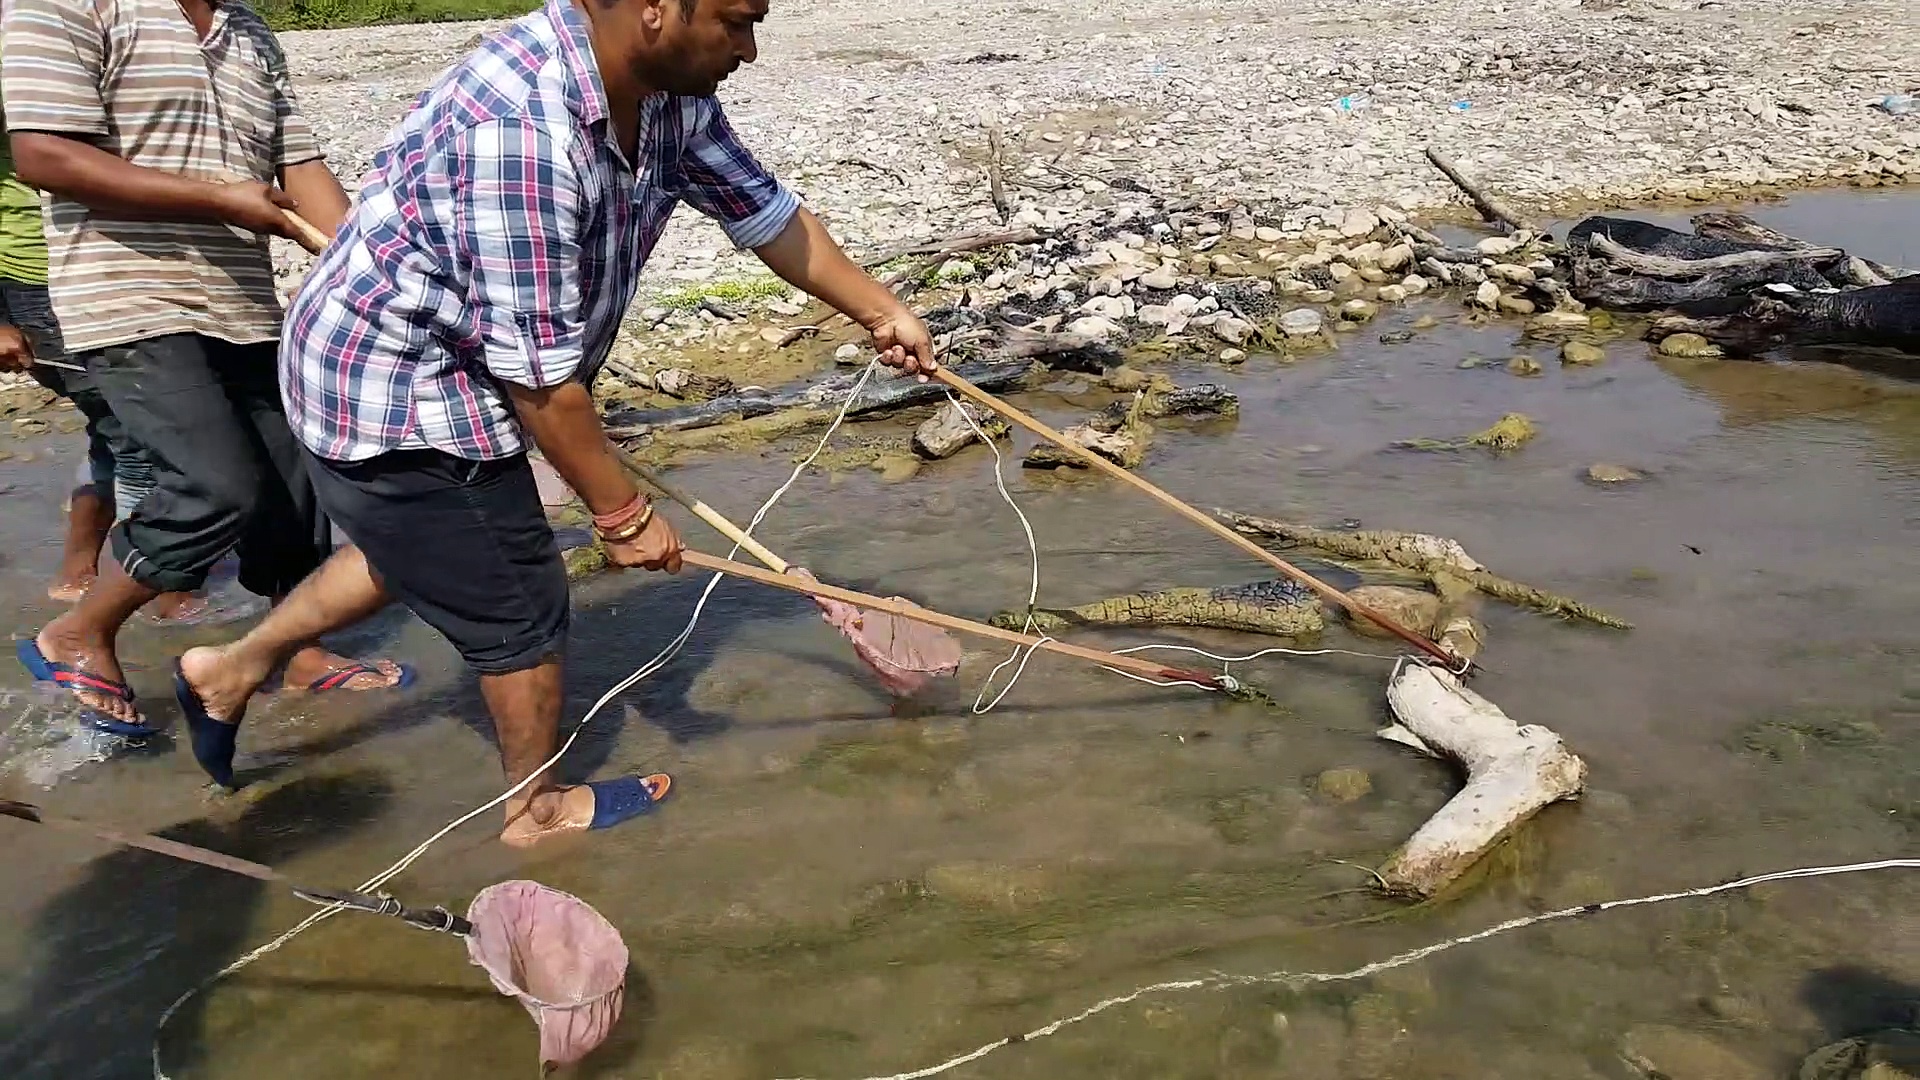 Nepali village Fishing video | Fishing with electricity | village fishing style| fishing with electric shock